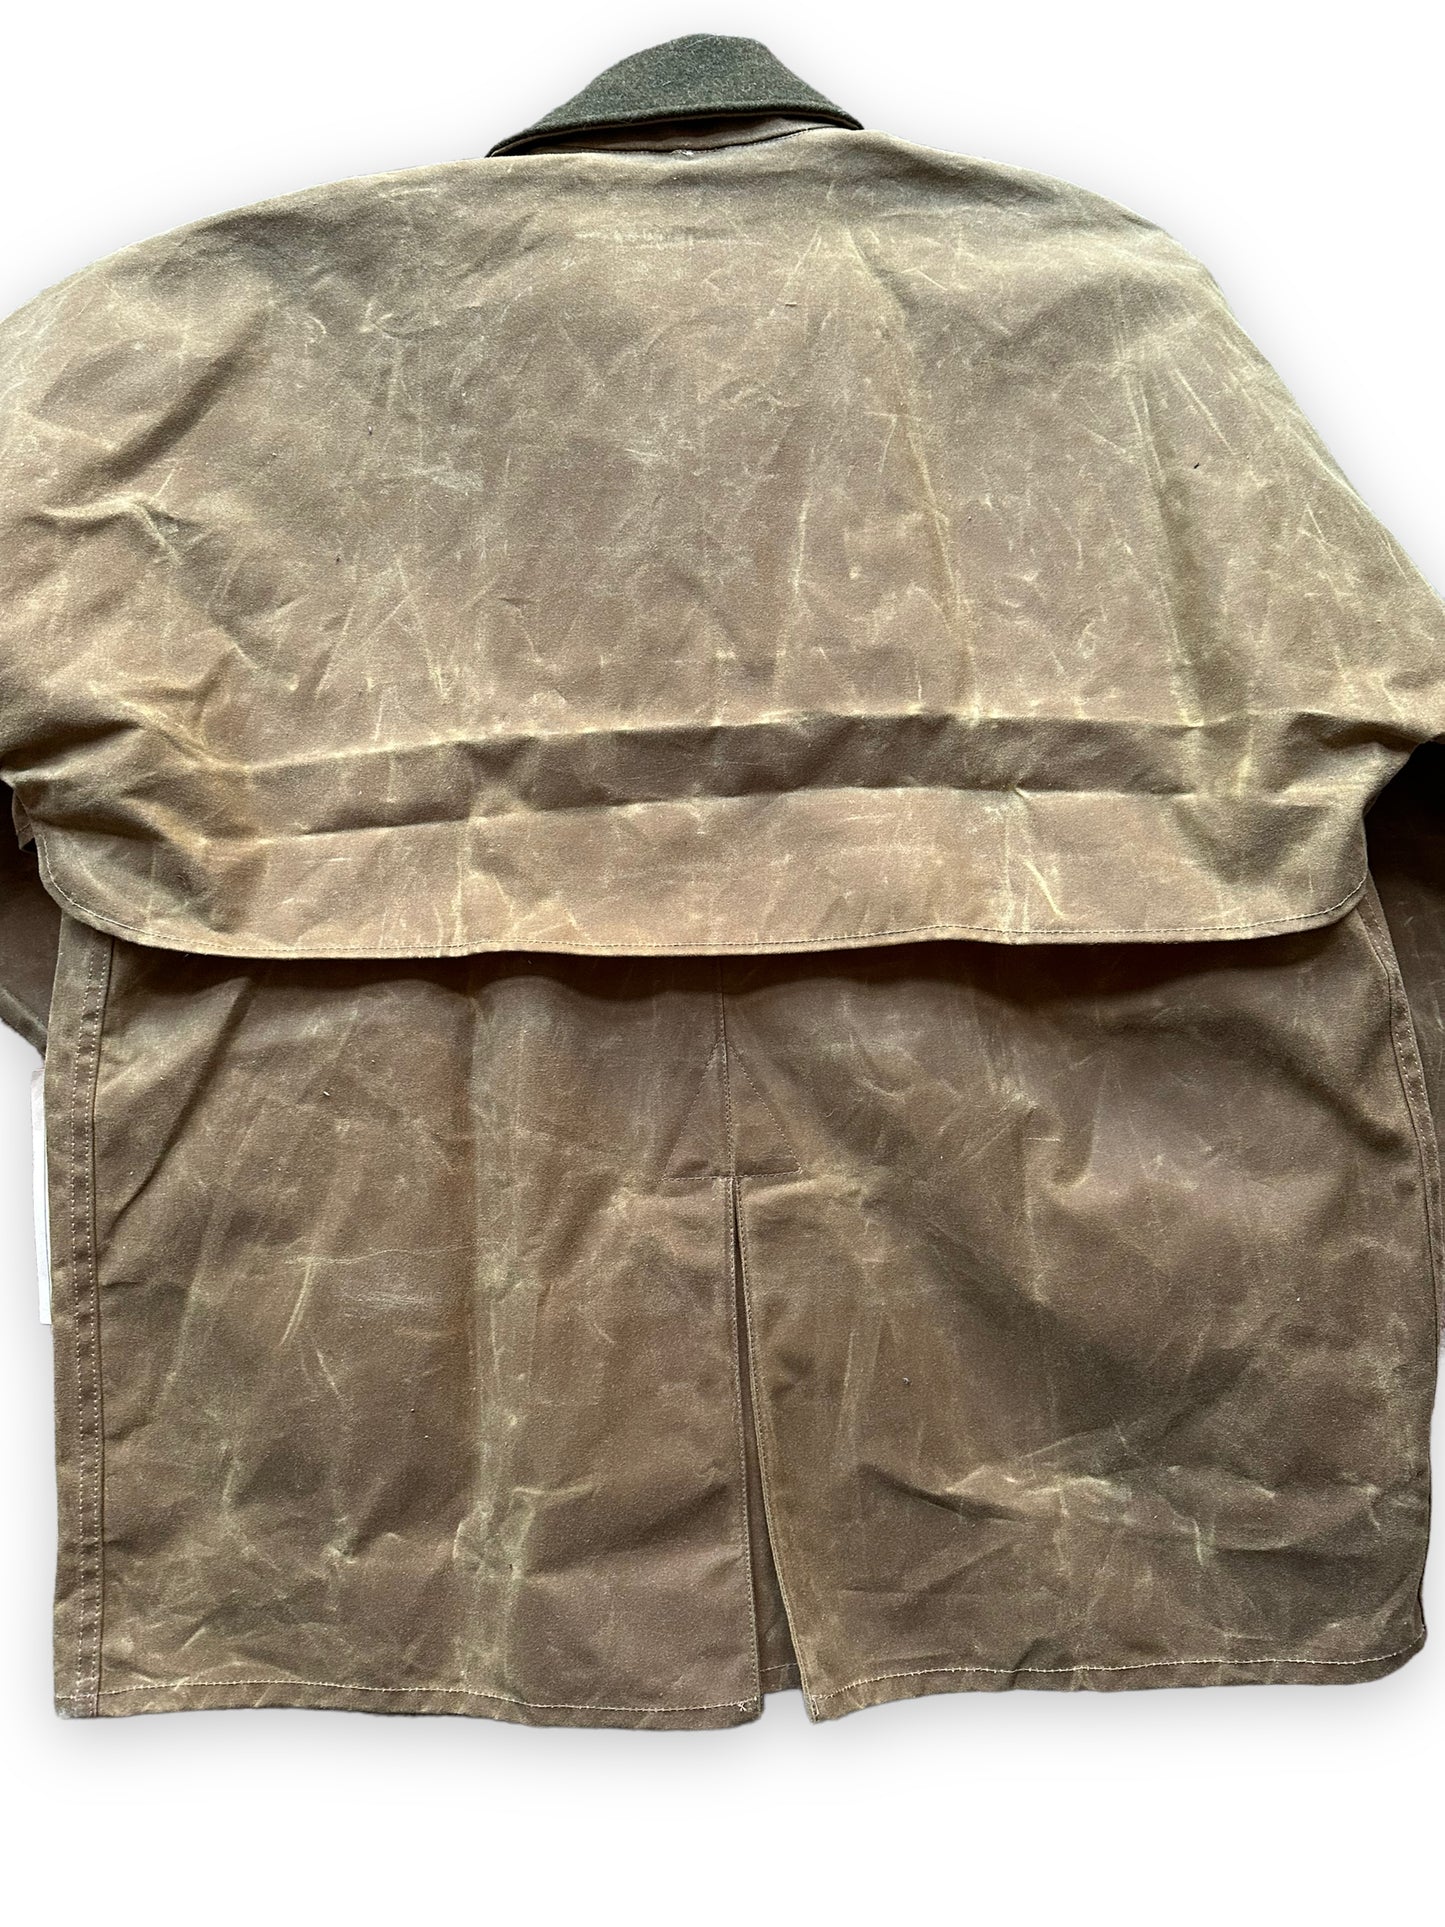 Rear Detail on NWT Filson Tin Packer Coat SZ XL |  Barn Owl Vintage Goods Filson | Vintage Filson Tin Cloth Workwear Seattle